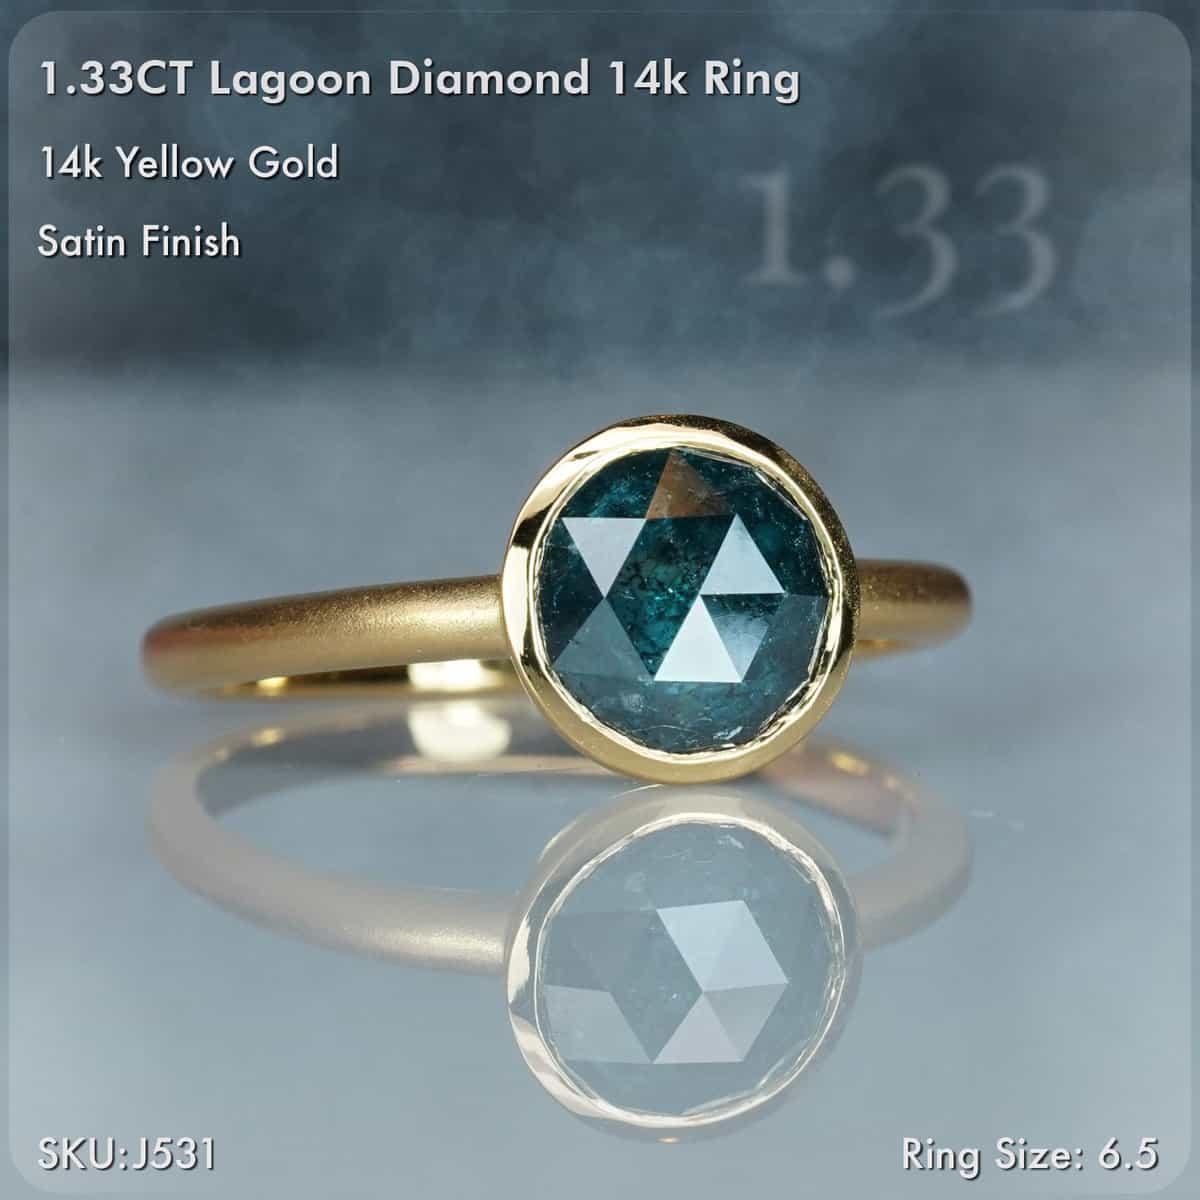 1.33CT Tidepool Diamond Ring